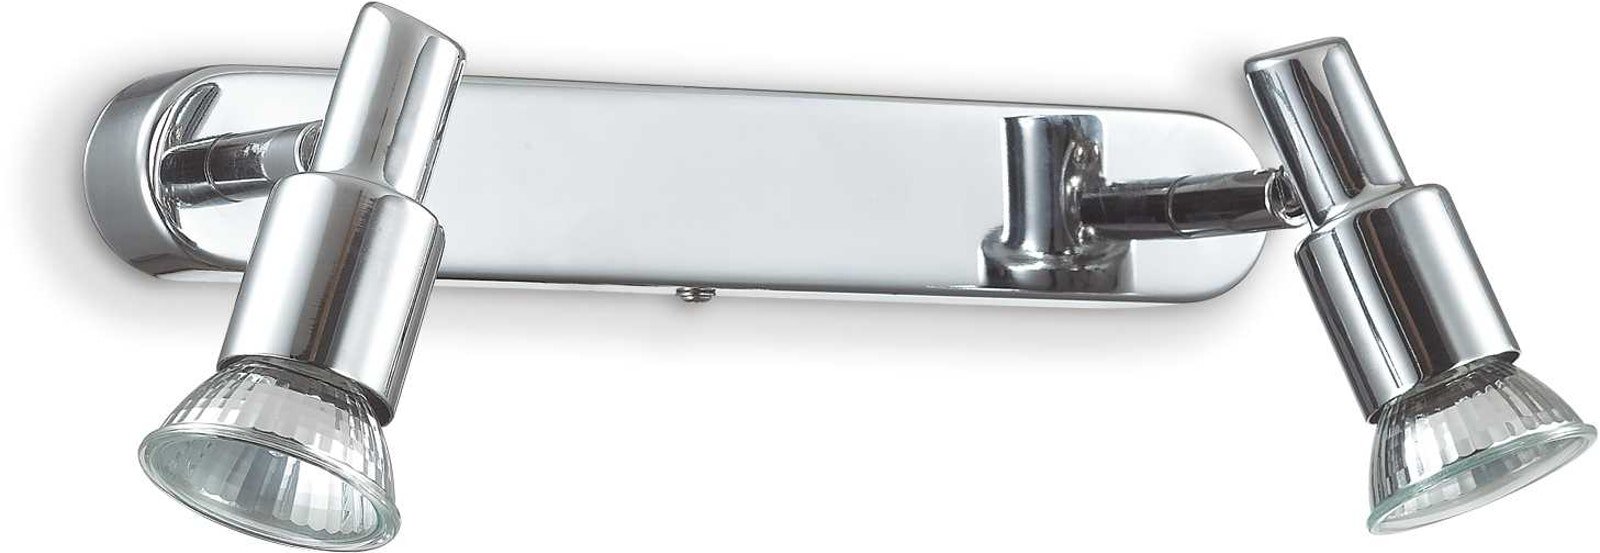 Slem, Væglampe, Ap2, metal by Ideal Lux (H: 10 cm. x B: 13 cm. x L: 26 cm., Krom)